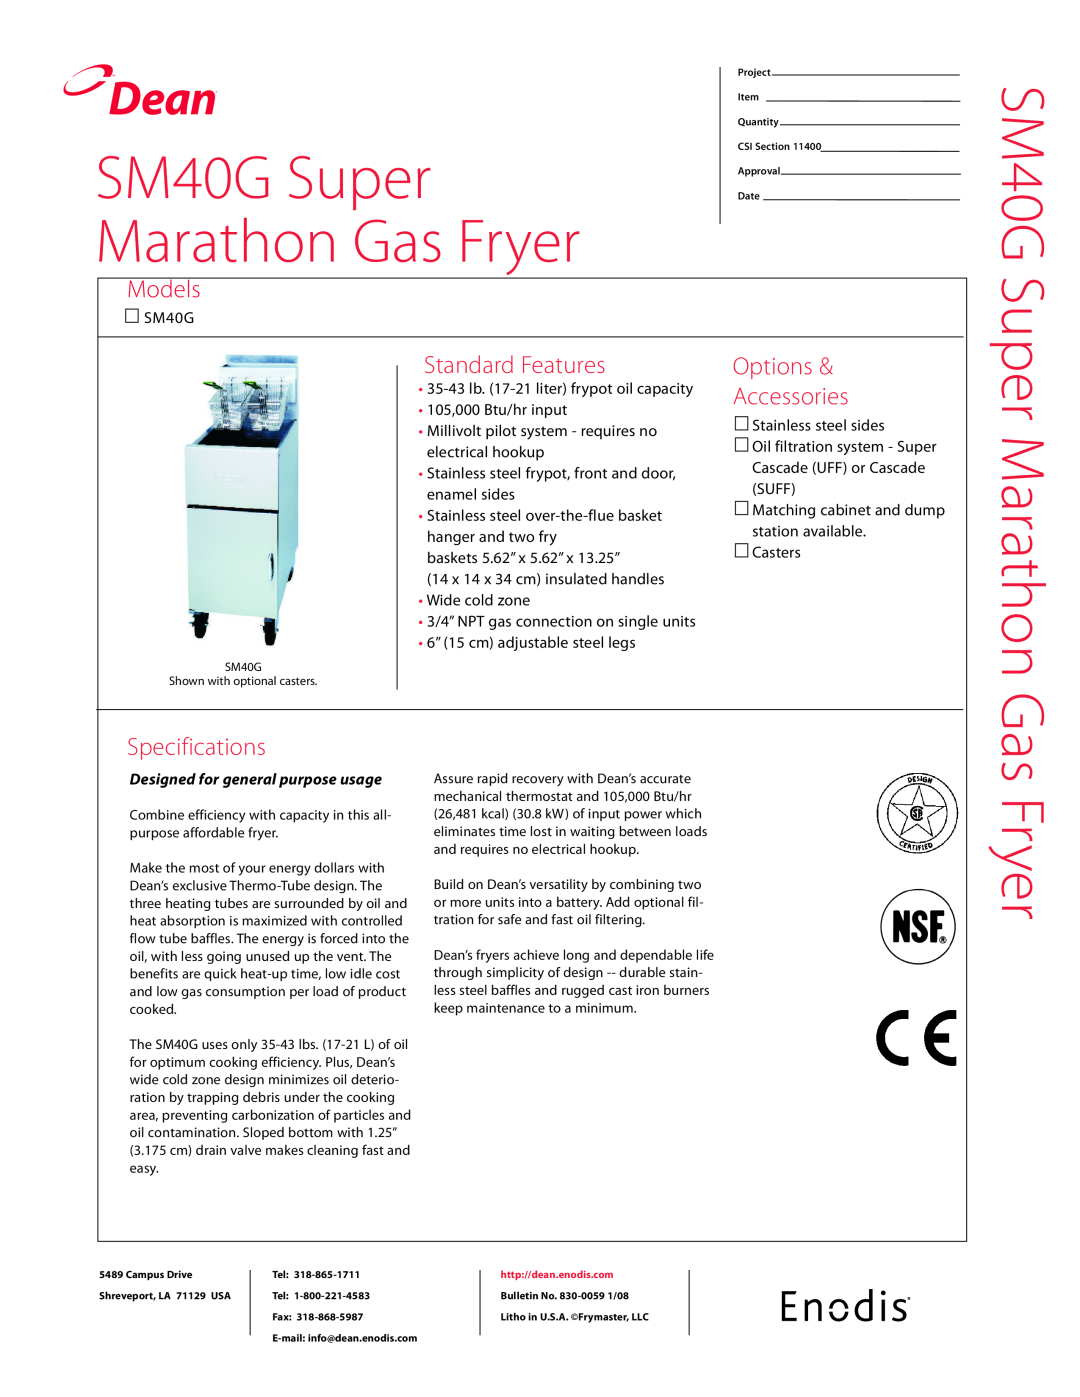 Teac specifications Dean, SM40G Super Marathon Gas Fryer, Models, Standard Features, Options Accessories 